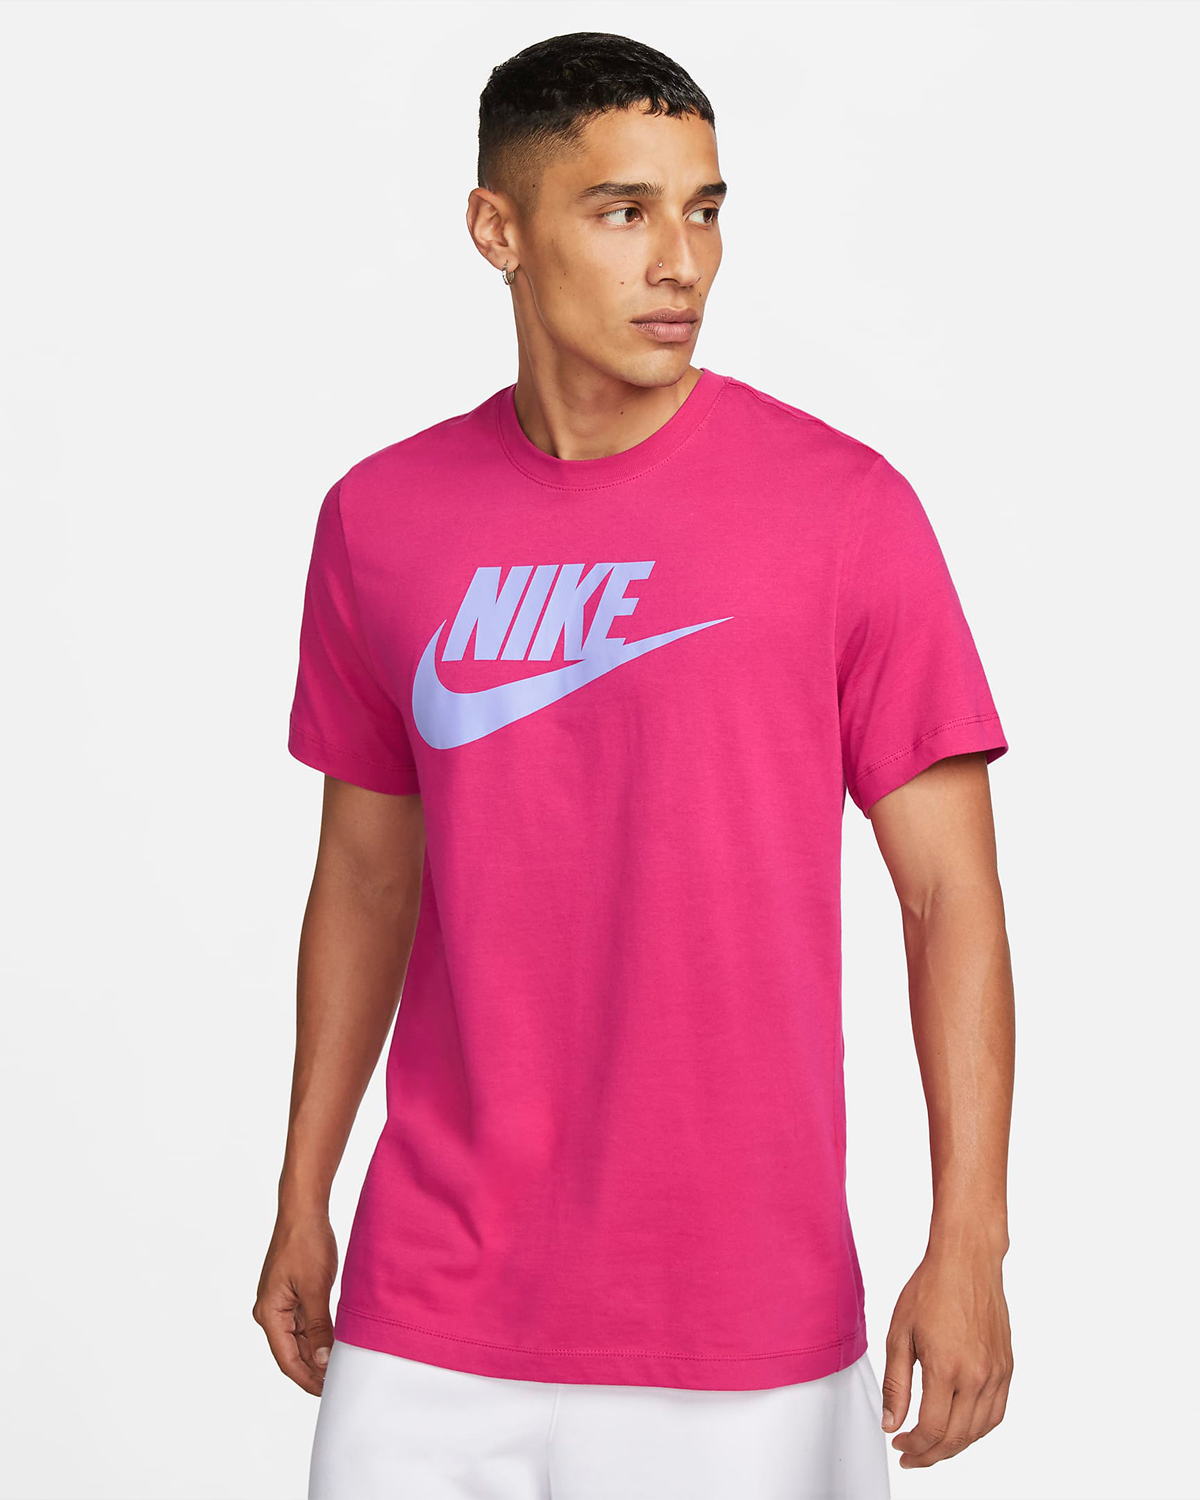 Nike-Sportswear-T-Shirt-Active-Pink